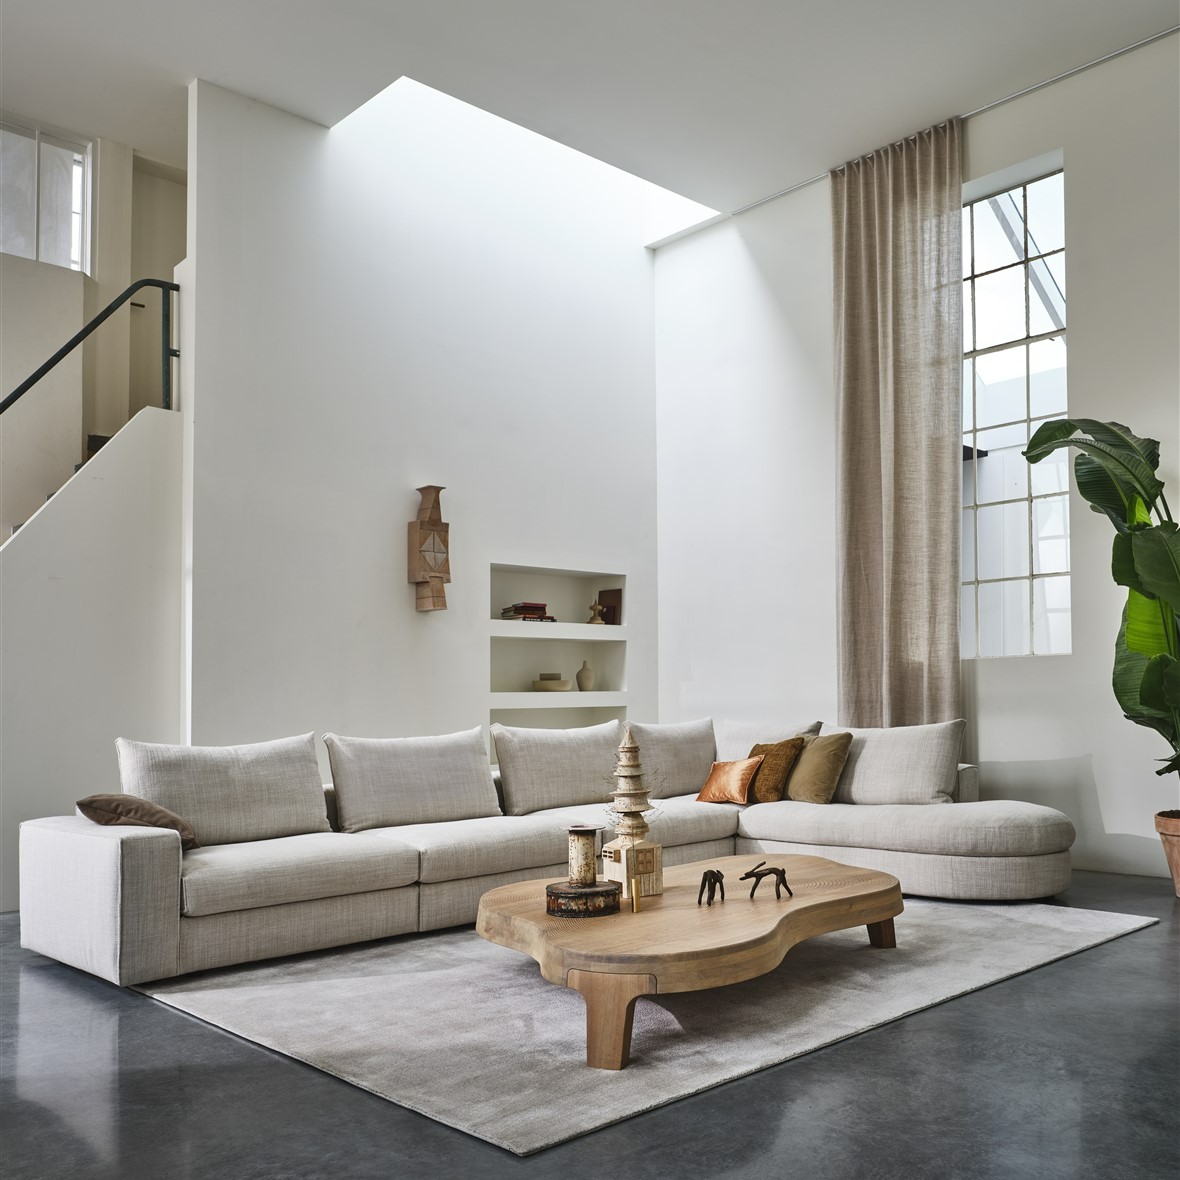 The 'Hamptons' sofa: a LINTELOO favorite. Endlessly versatile in its compositions and extremely comfortable. 

Photography: @sigurdkranendonk 
Styling: @kamer465 

#linteloo #interior #interiordesign #livingroomdesign #hamptons #modular  #sofa